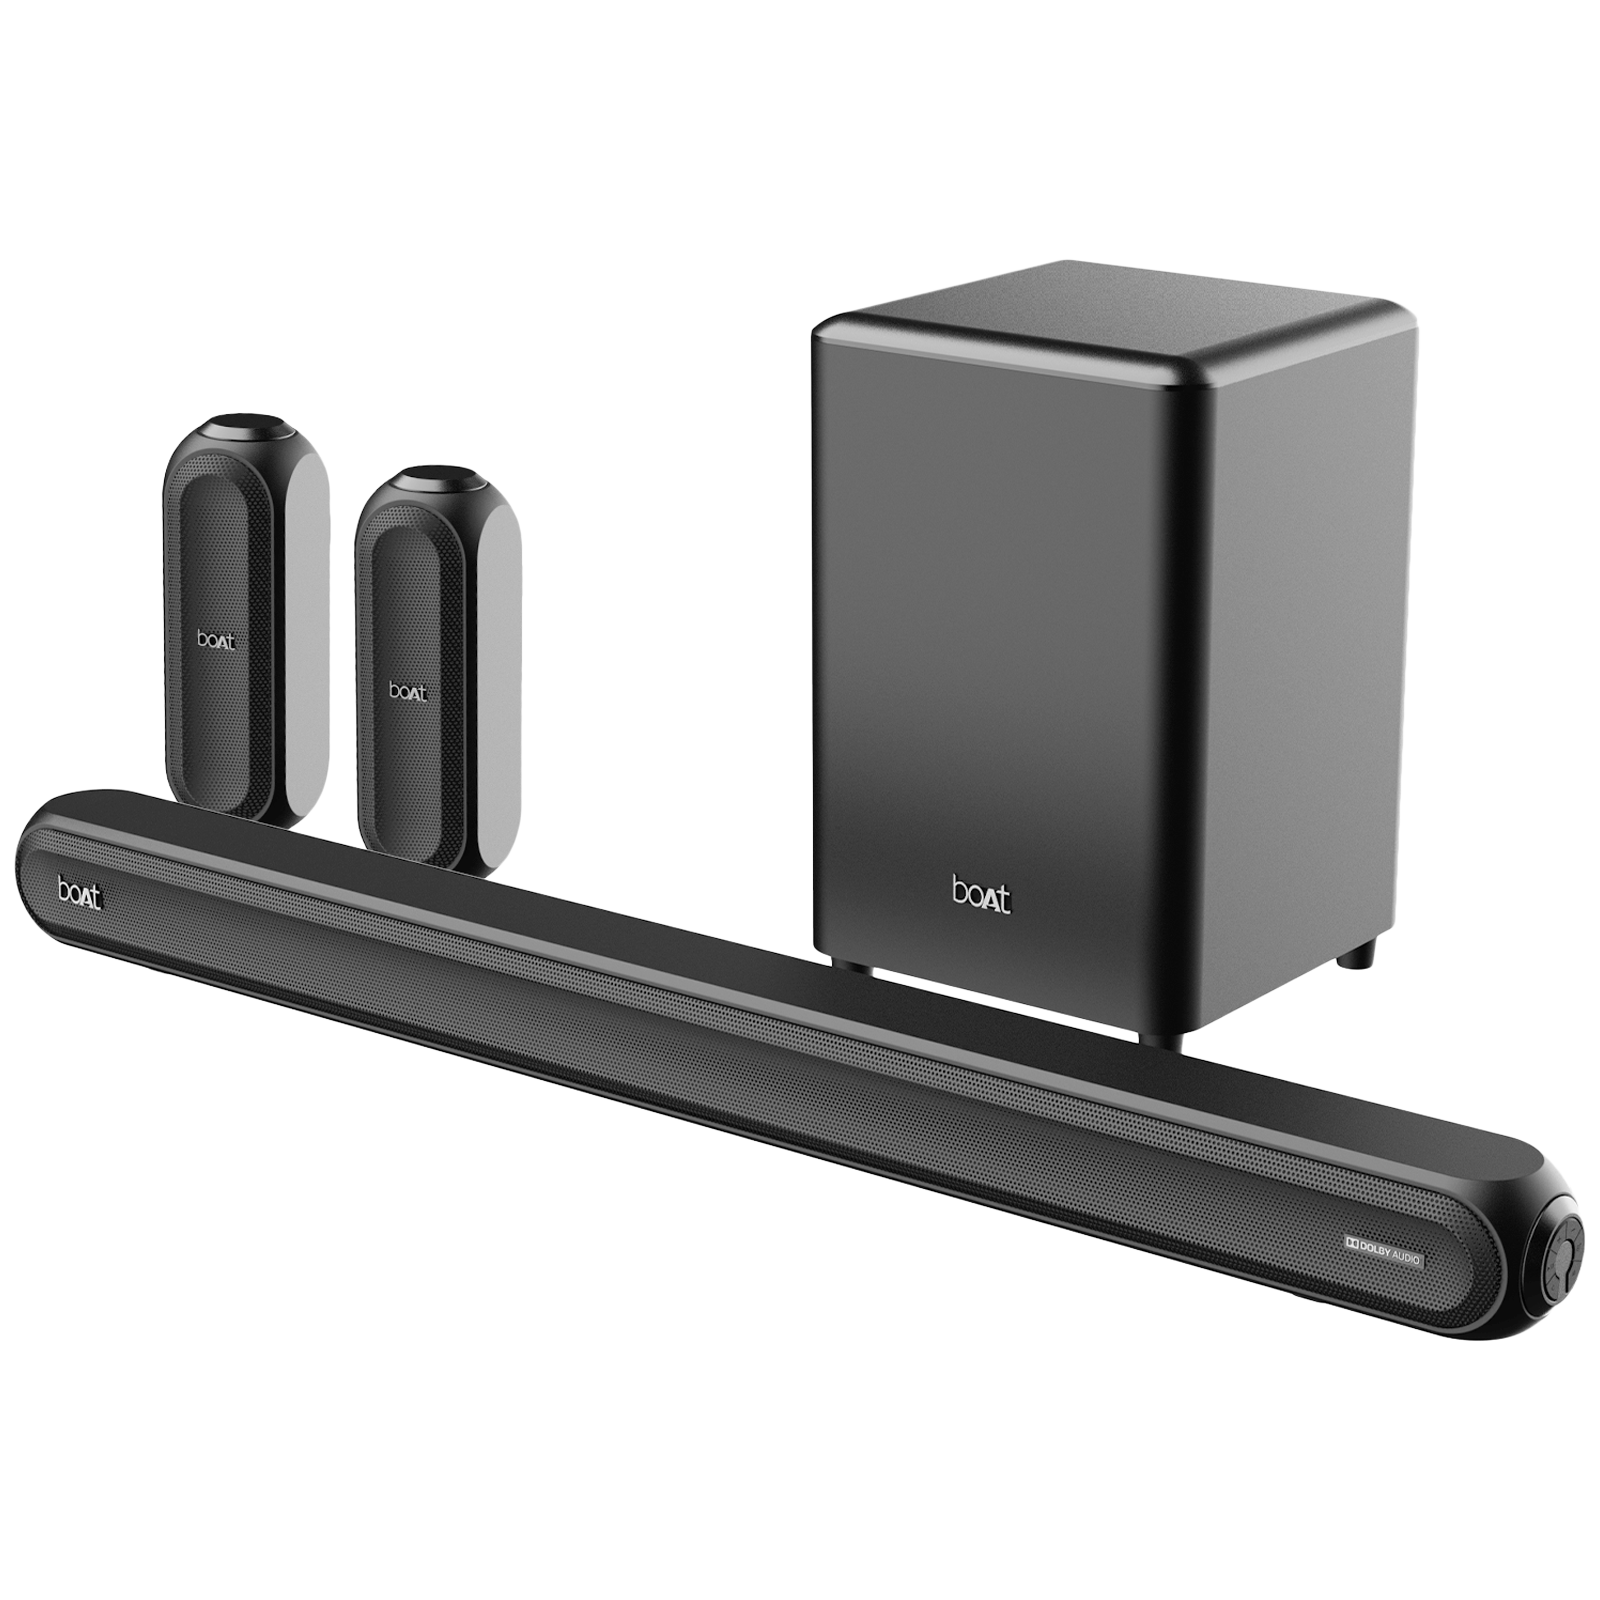 Buy SONY HT-S40R 600W Bluetooth Soundbar with Remote (Dolby Digital, 5.1  Channel, Black) Online – Croma